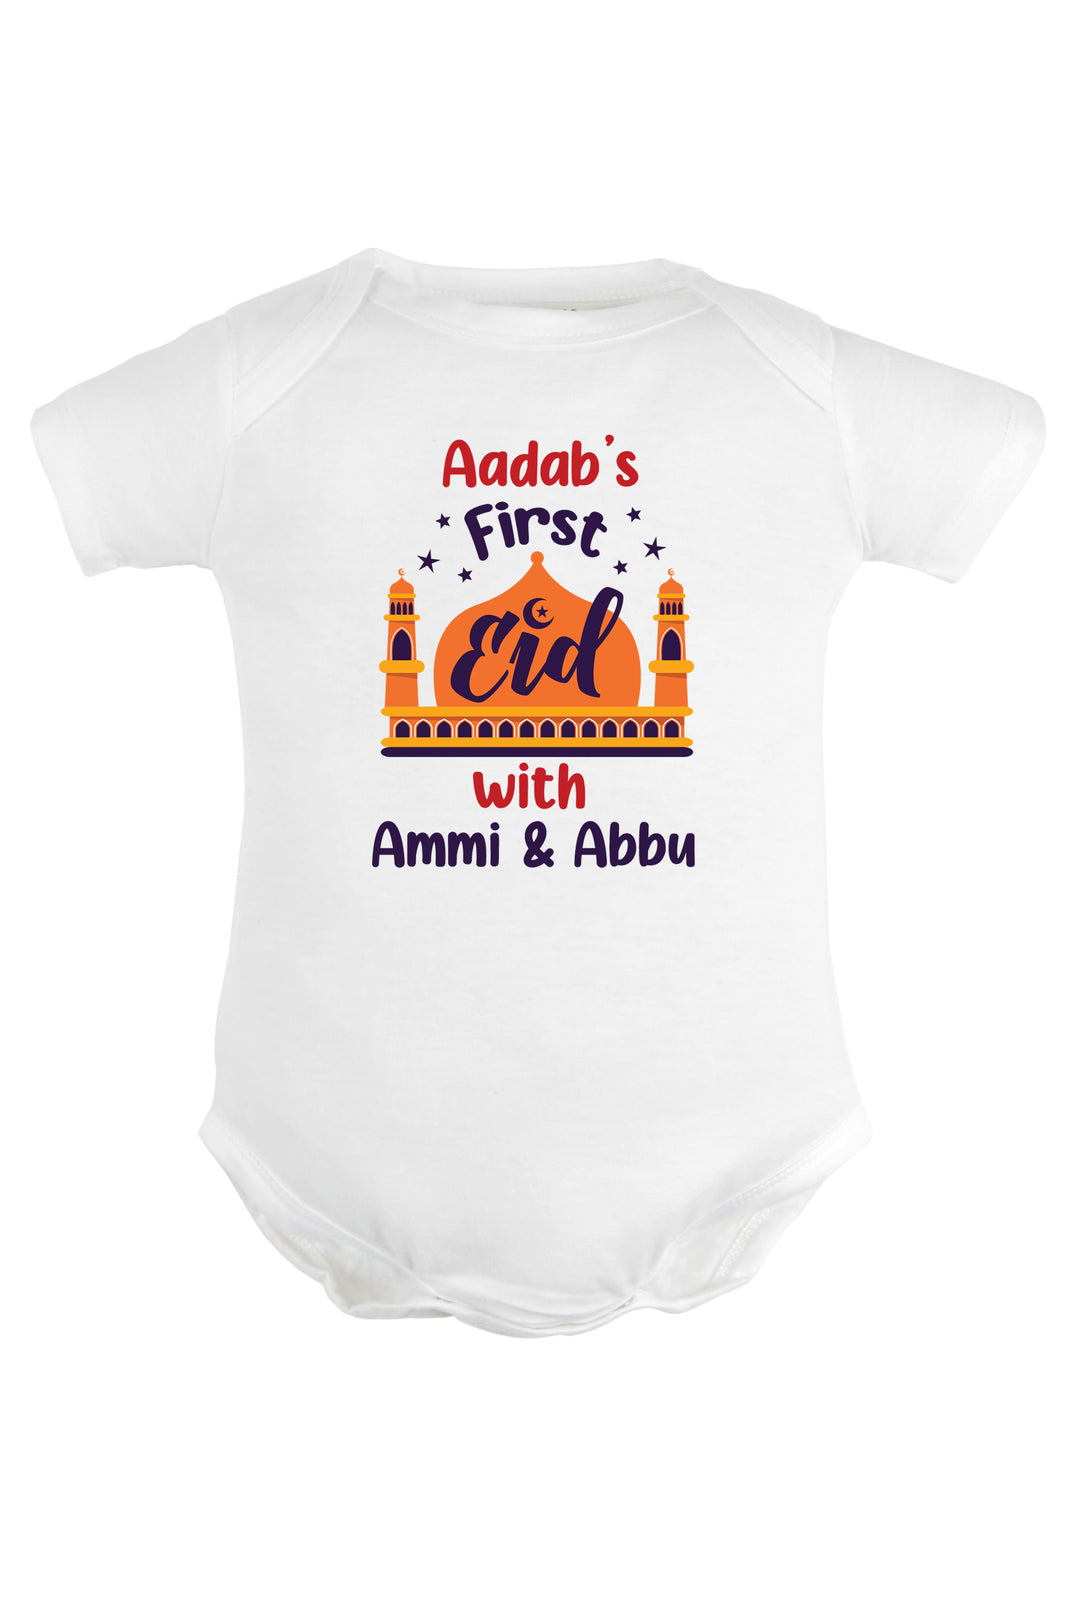 My First Eid with Ammi & Abbu Baby Romper | Onesies w/ Custom Name